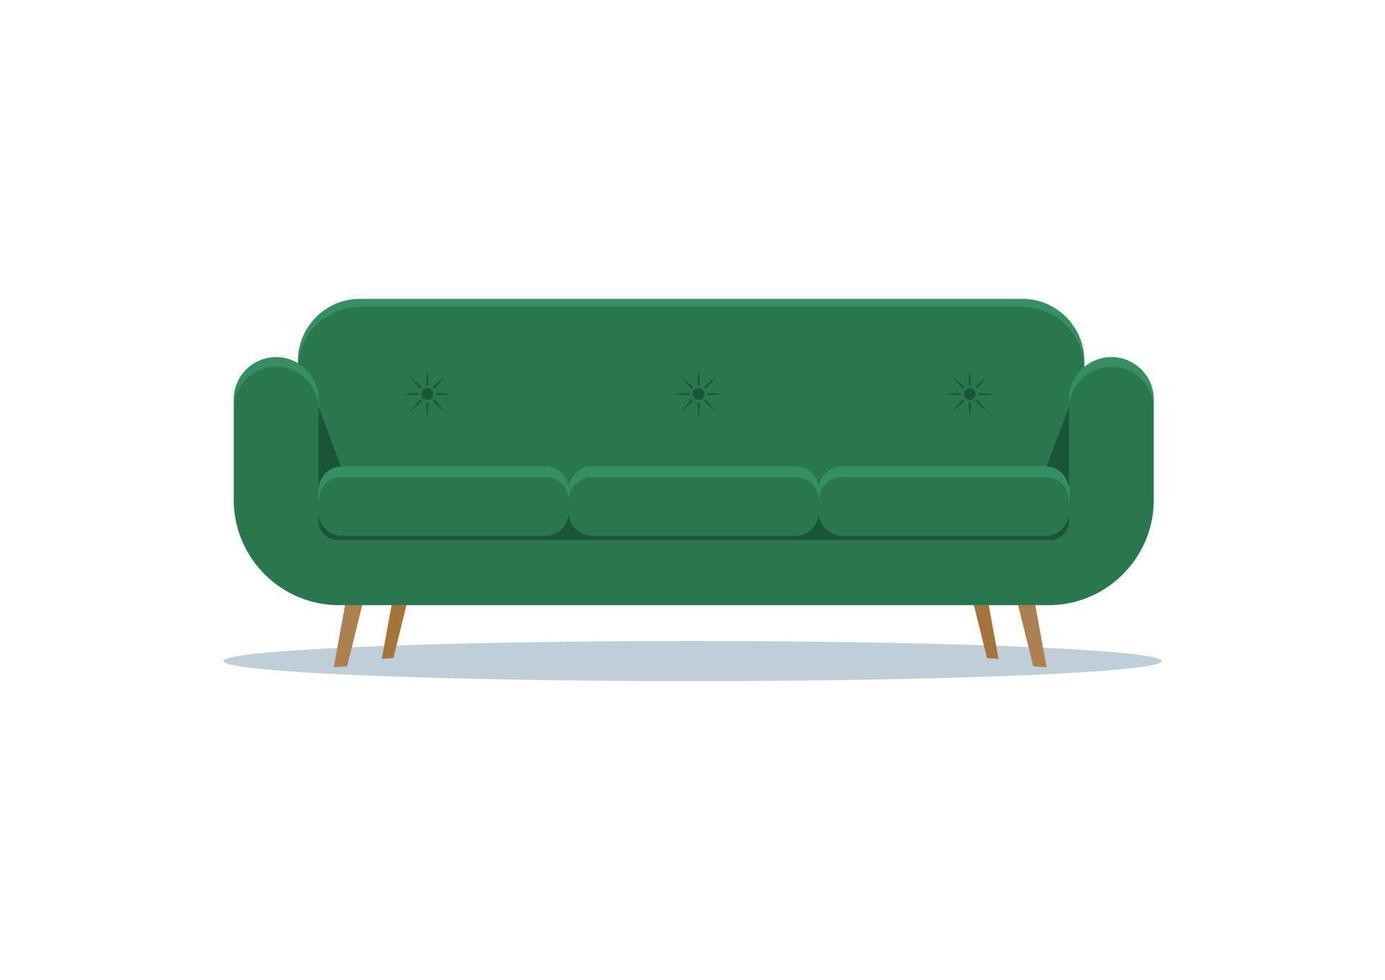 Modern green sofa in flat style vector